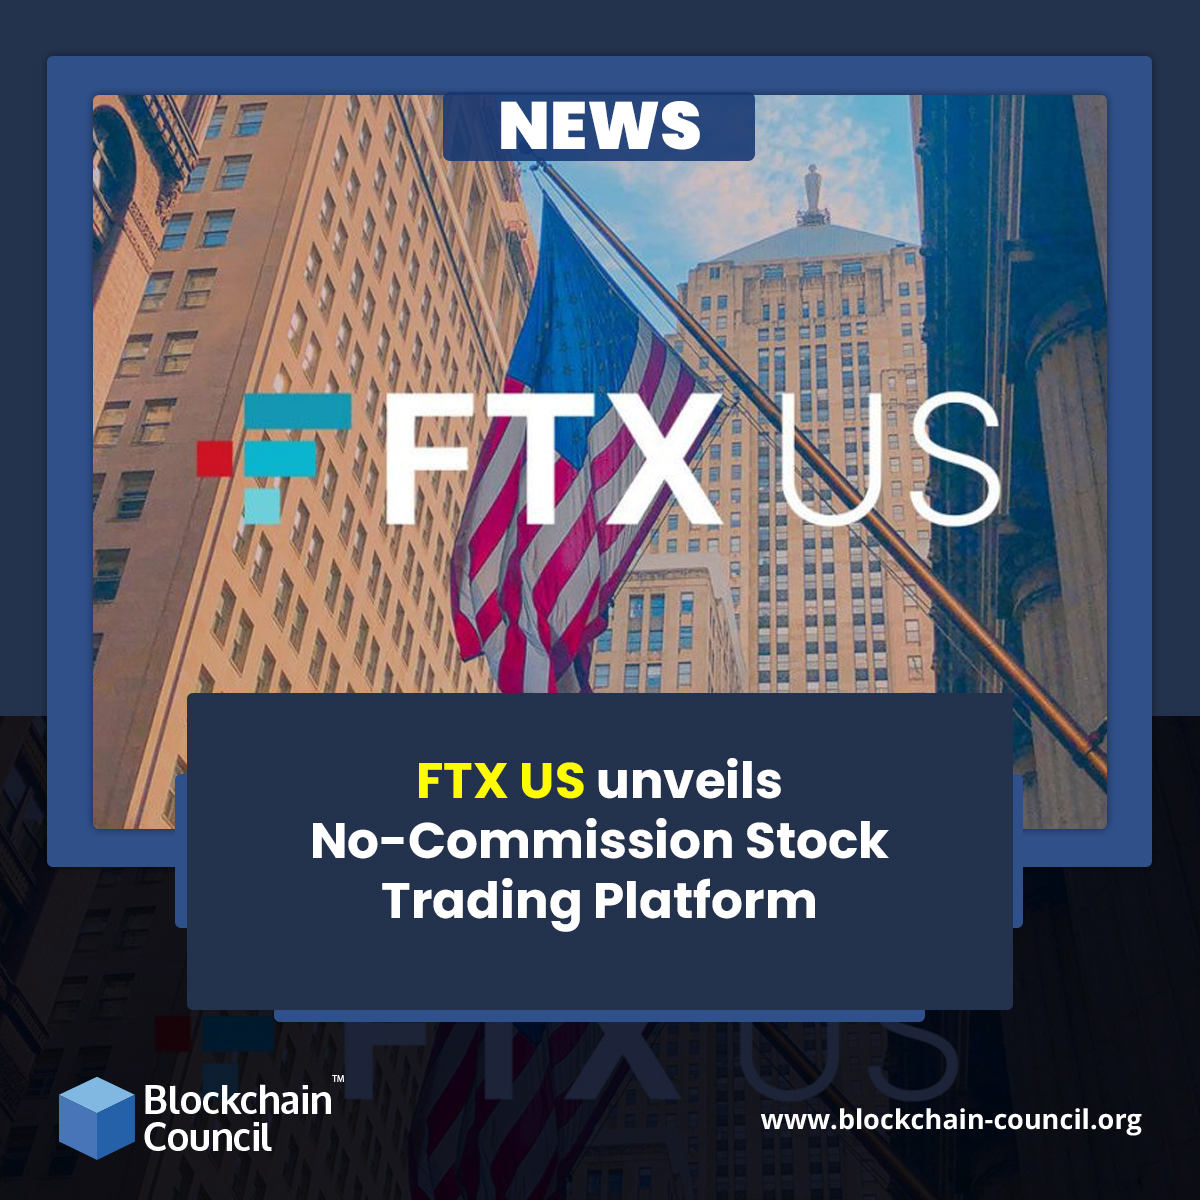 FTX US unveils No-Commission Stock Trading Platform